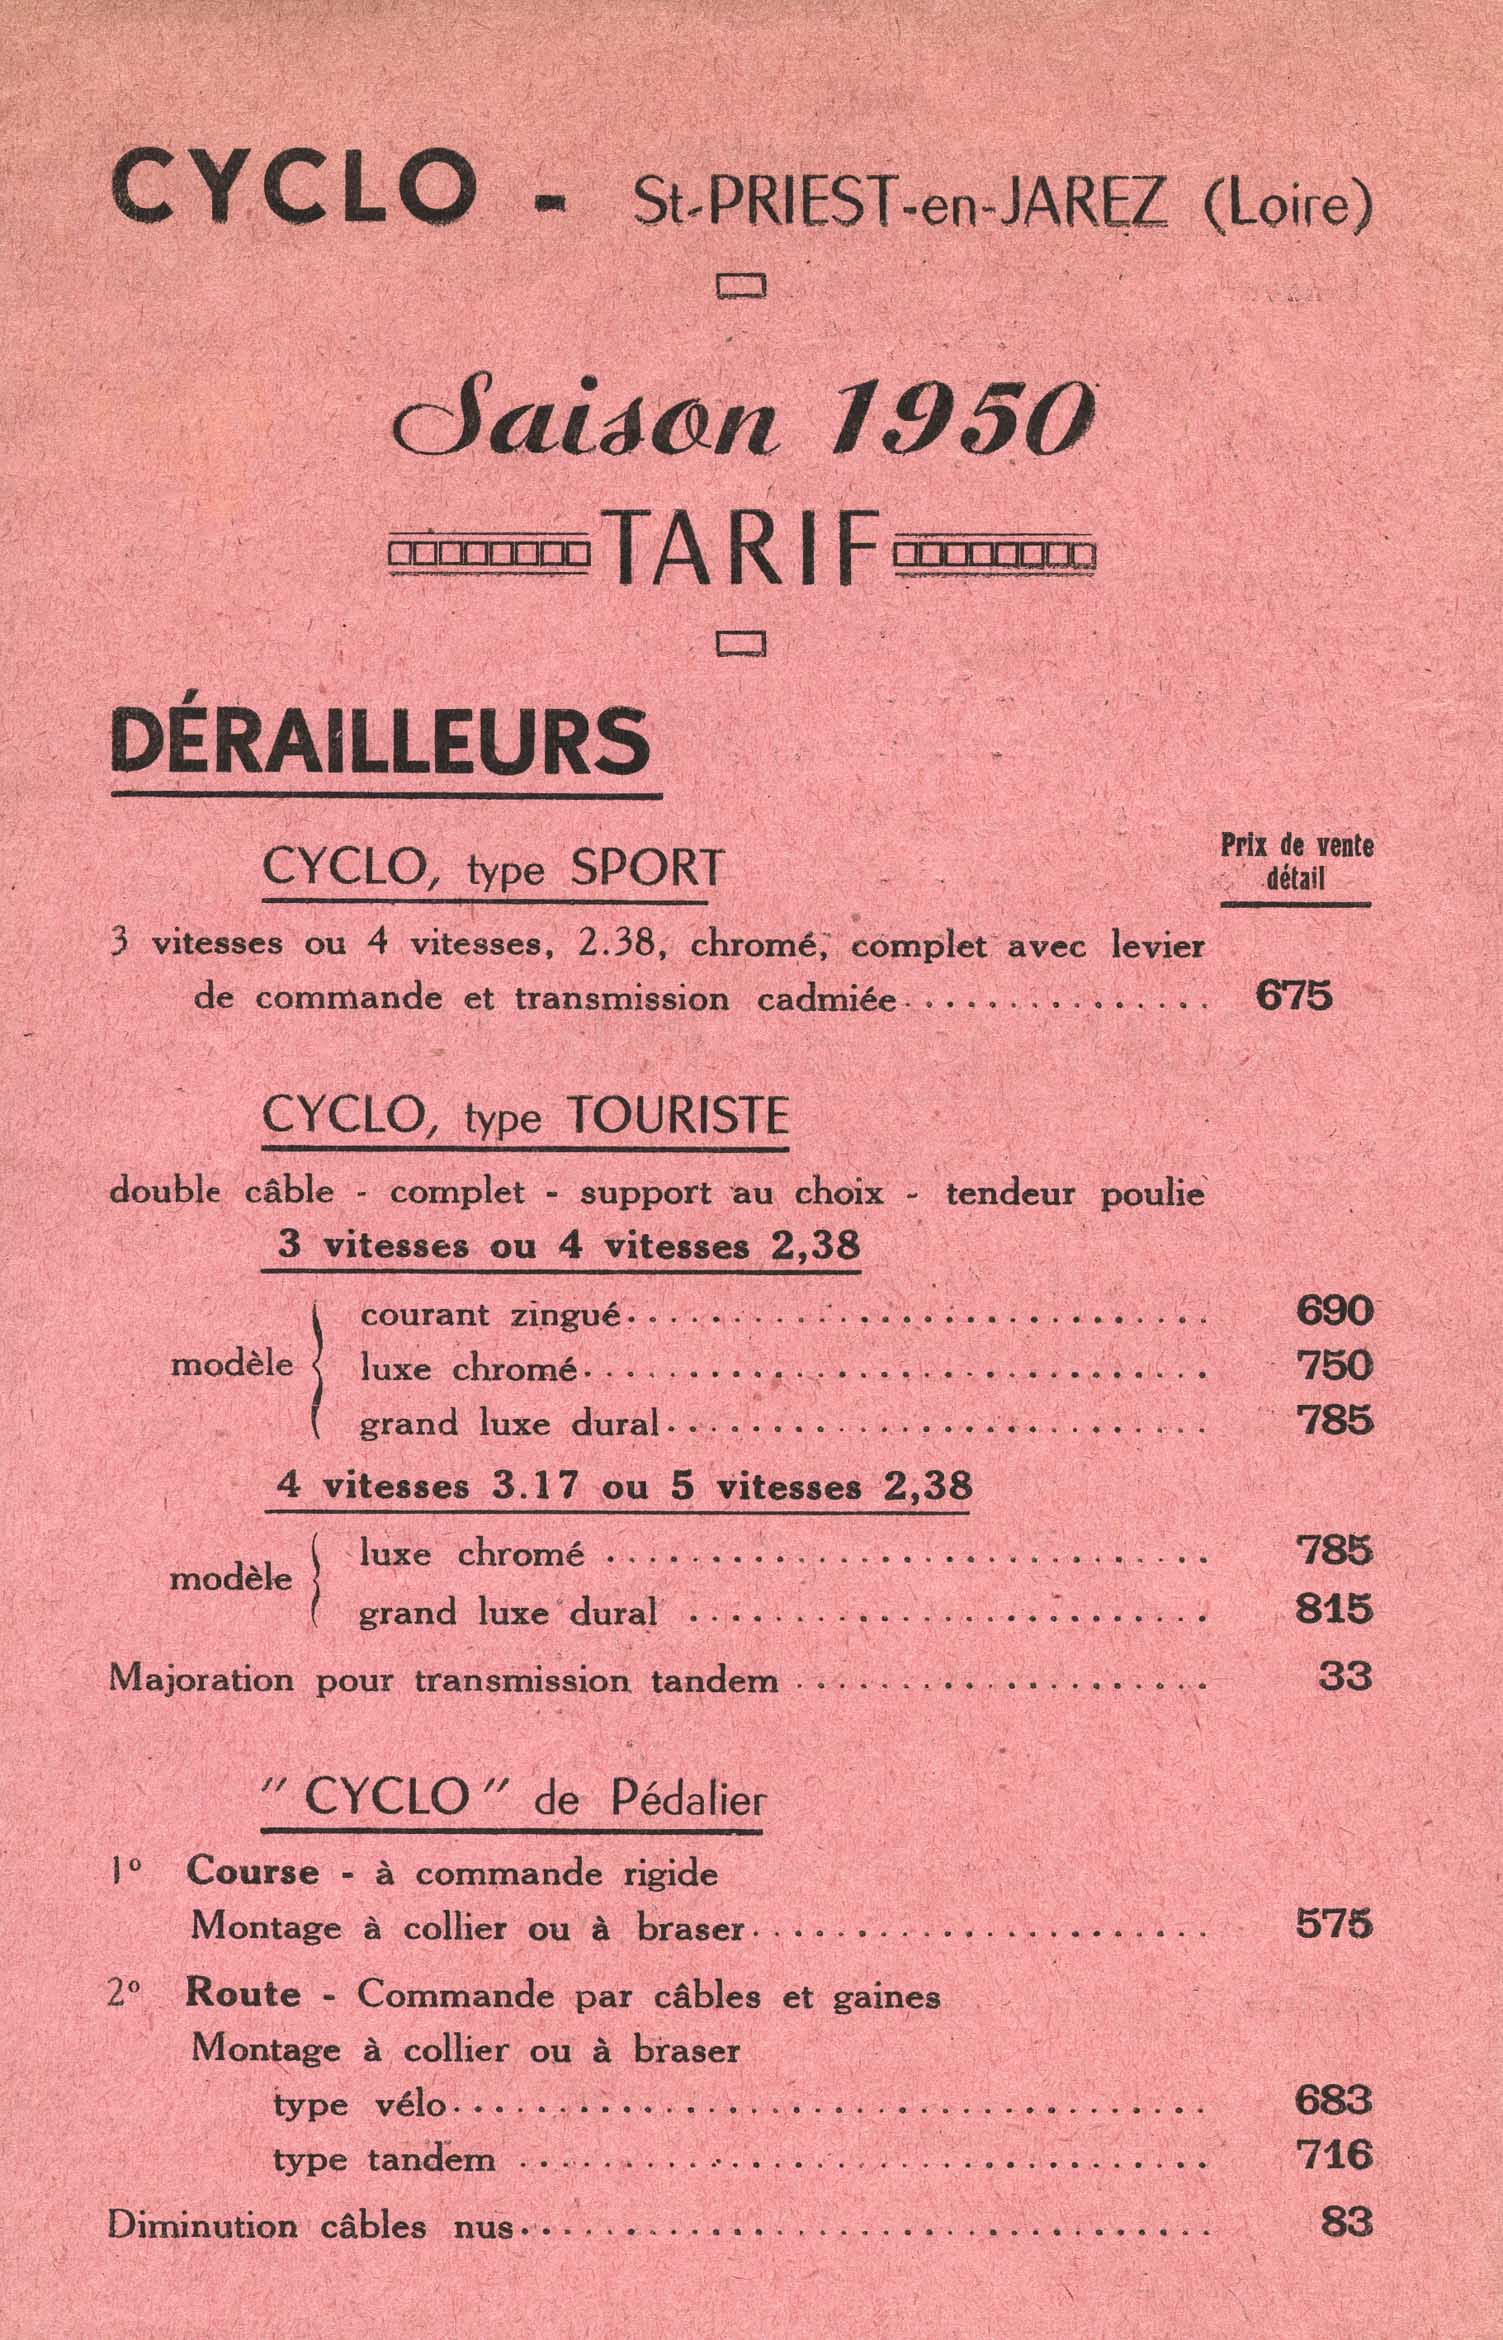 Cyclo - Saison 1950 Tarif scan 01 main image